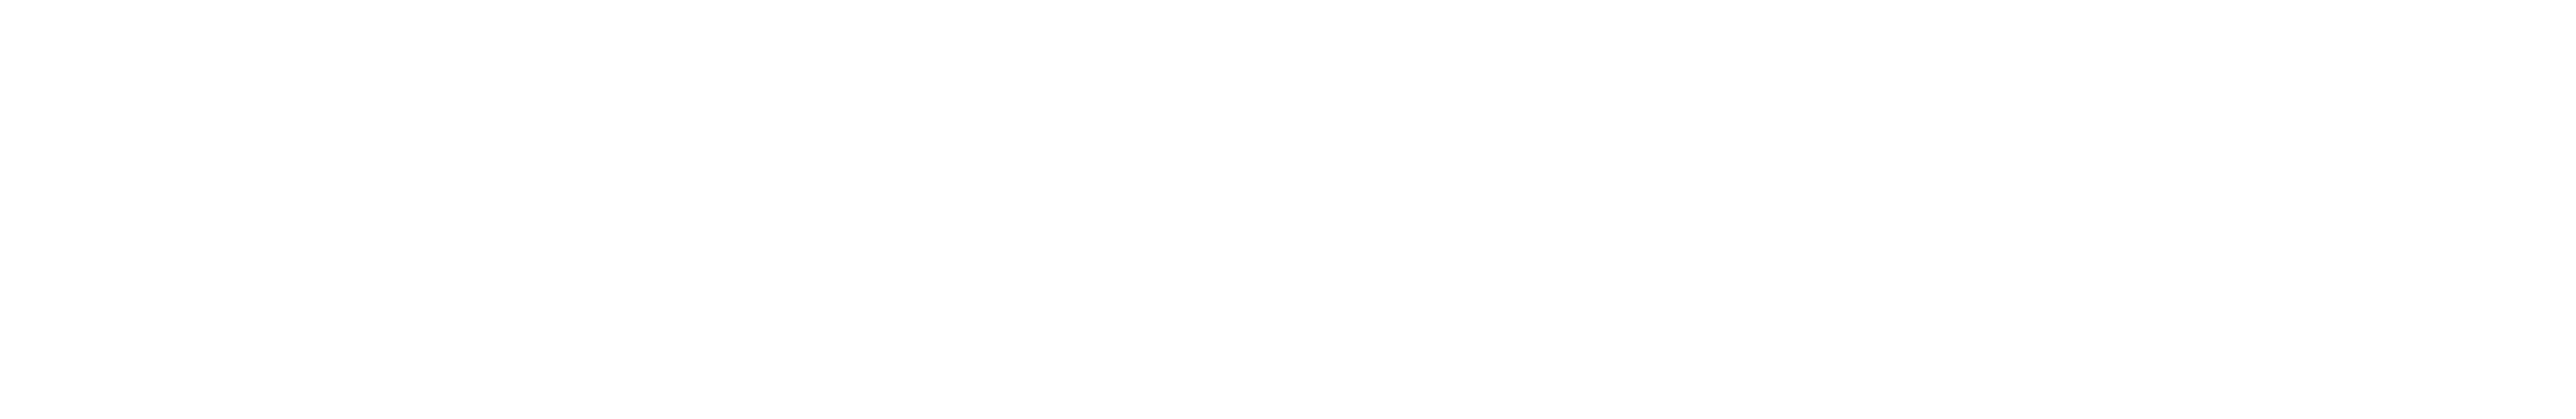 Alsaleh, Alzoman, and Alfahad Logo